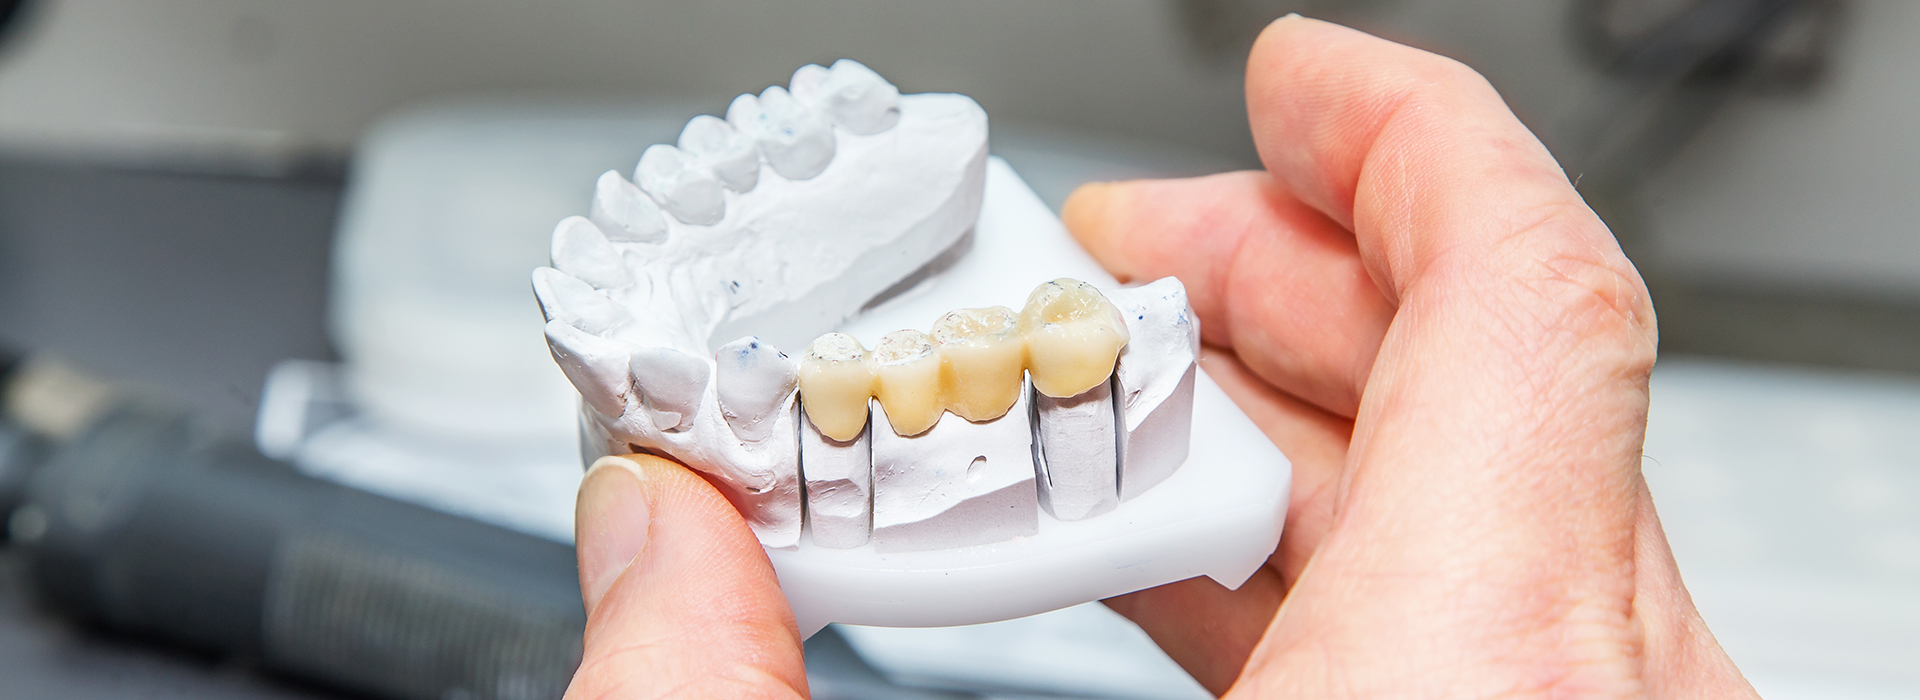 Bright Smile Dental Care, LTD | Extractions, Pediatric Dentistry and Preventative Program